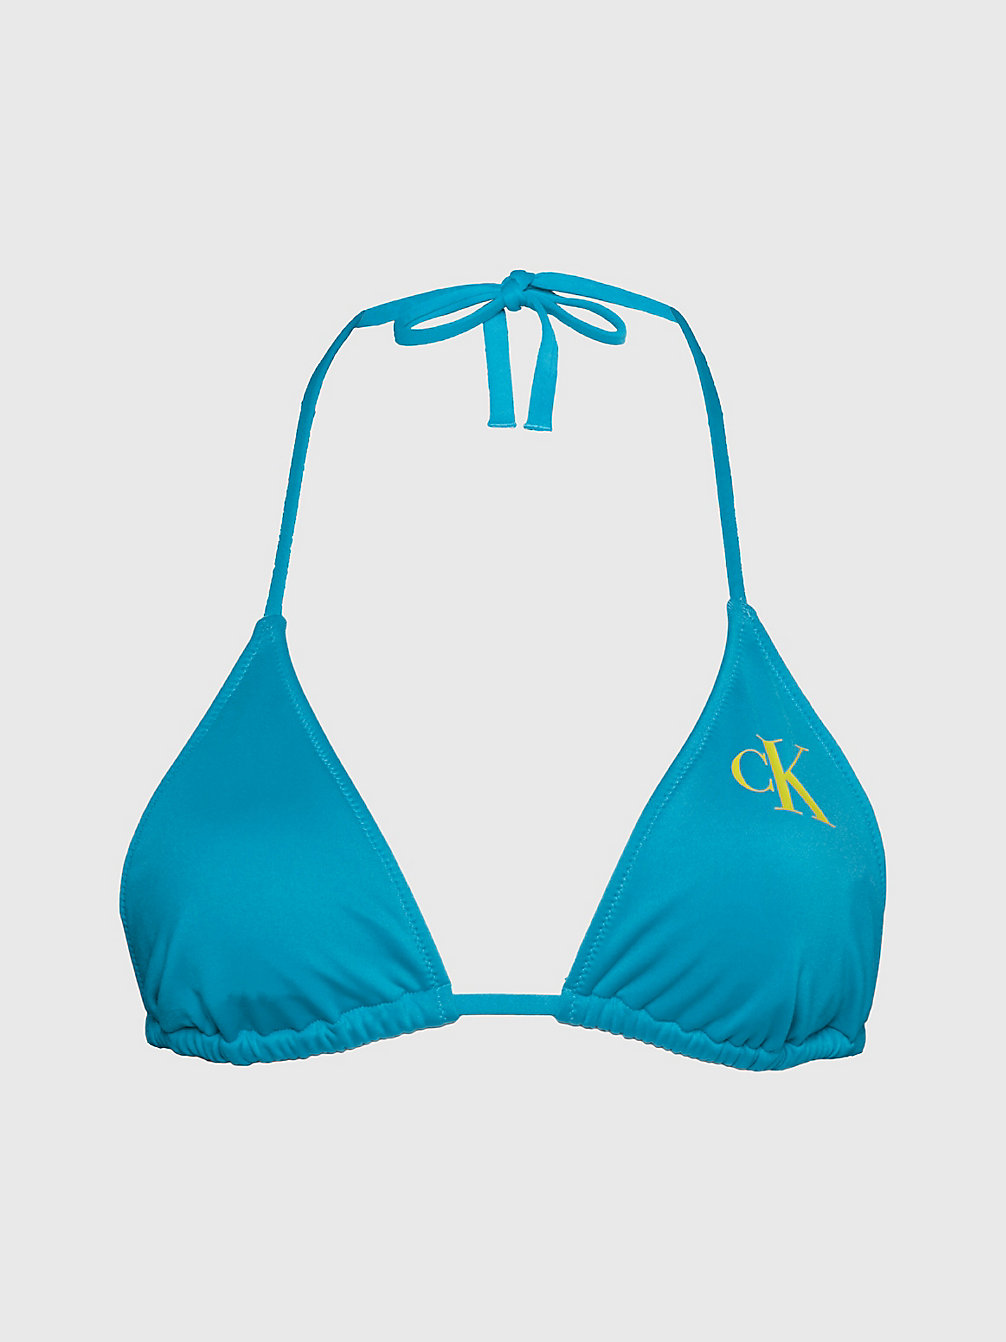 CLEAR TURQUOISE Triangle Bikini Top – CK Monogram undefined Damen Calvin Klein